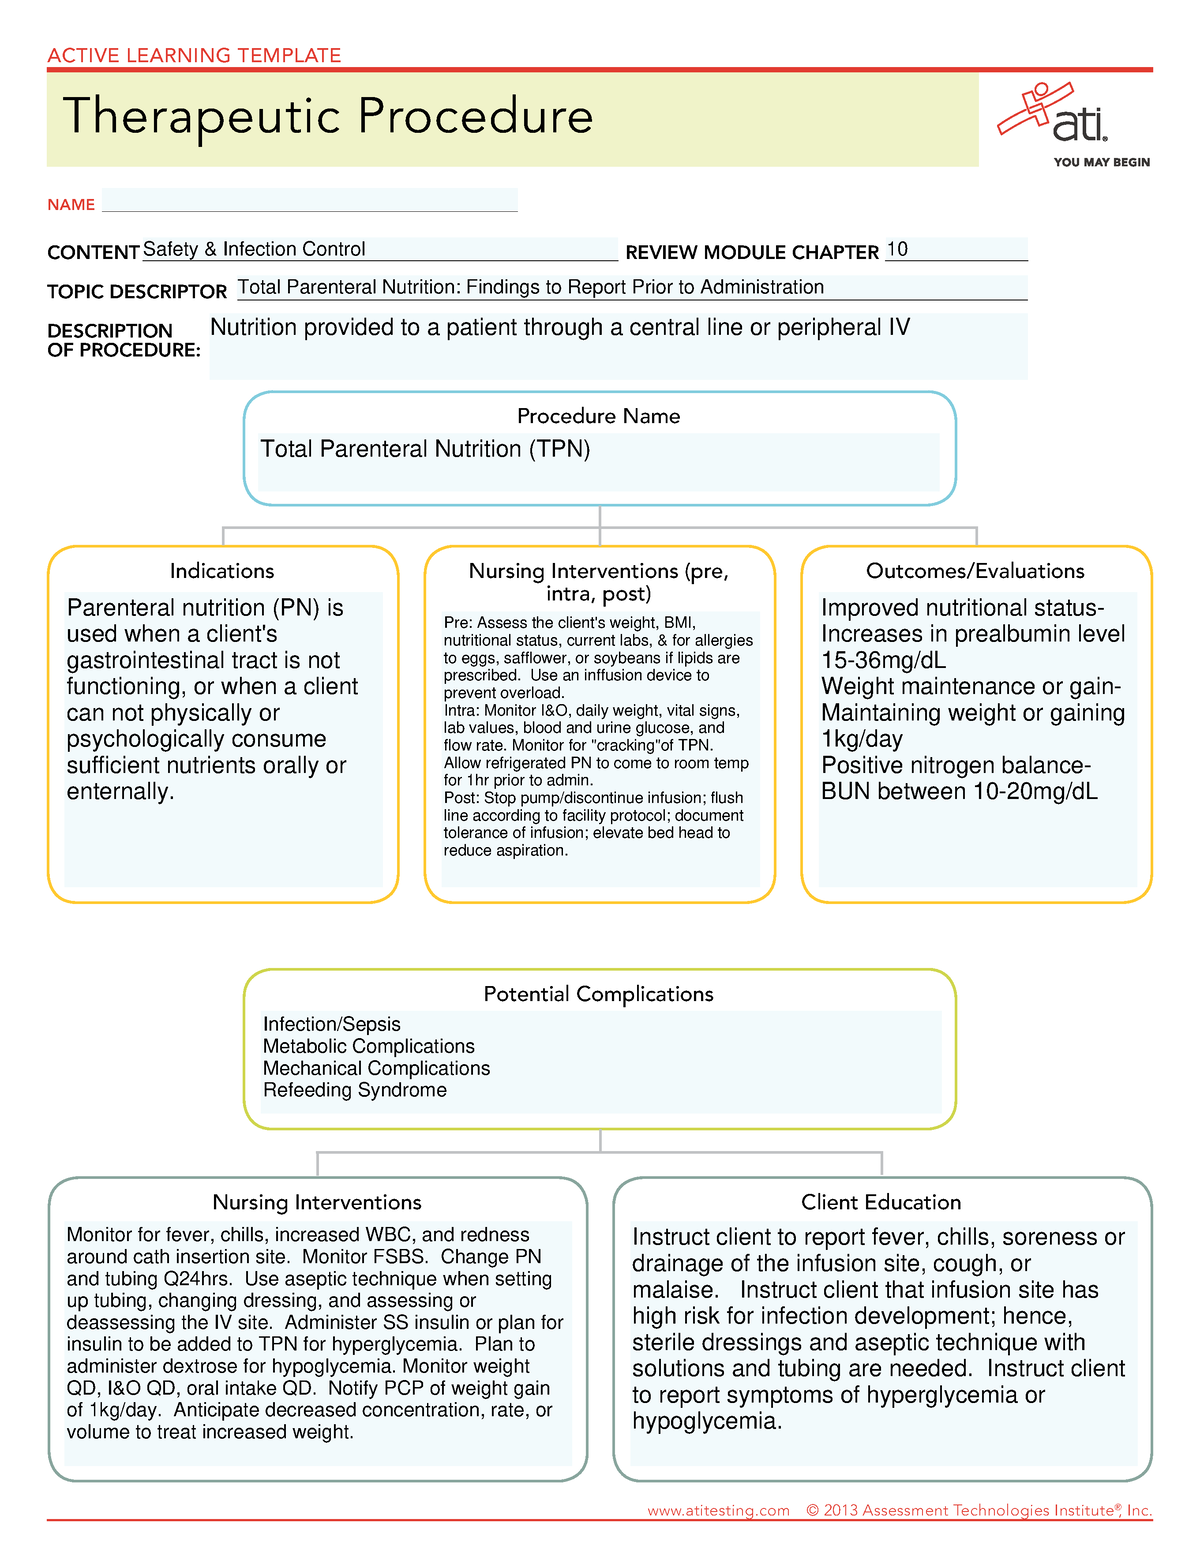 ati-therapeutic-procedure-template-indications-nursing-interventions